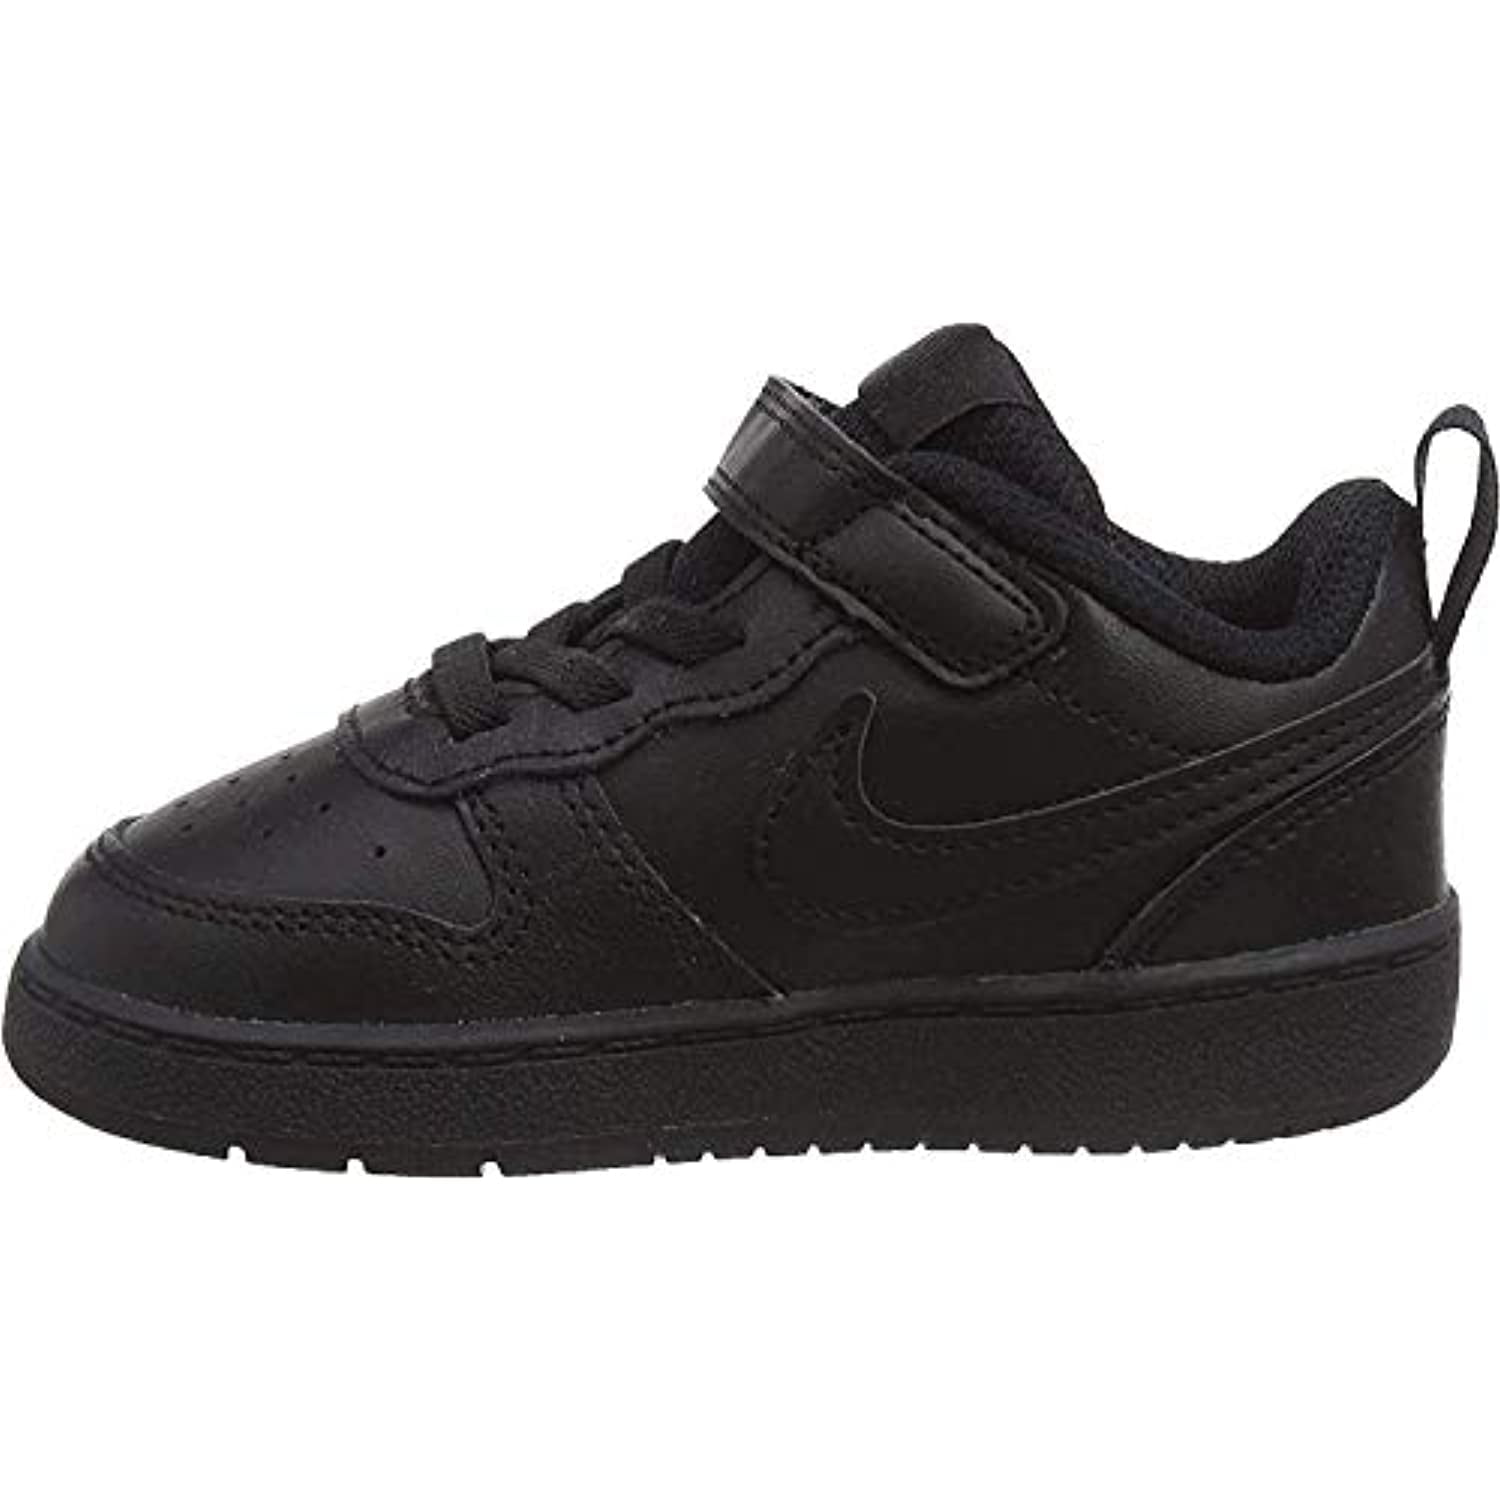 (TDV) Borough Court Low 9 2 Nike Size Black/Black/Black Bq5453-001 Toddler